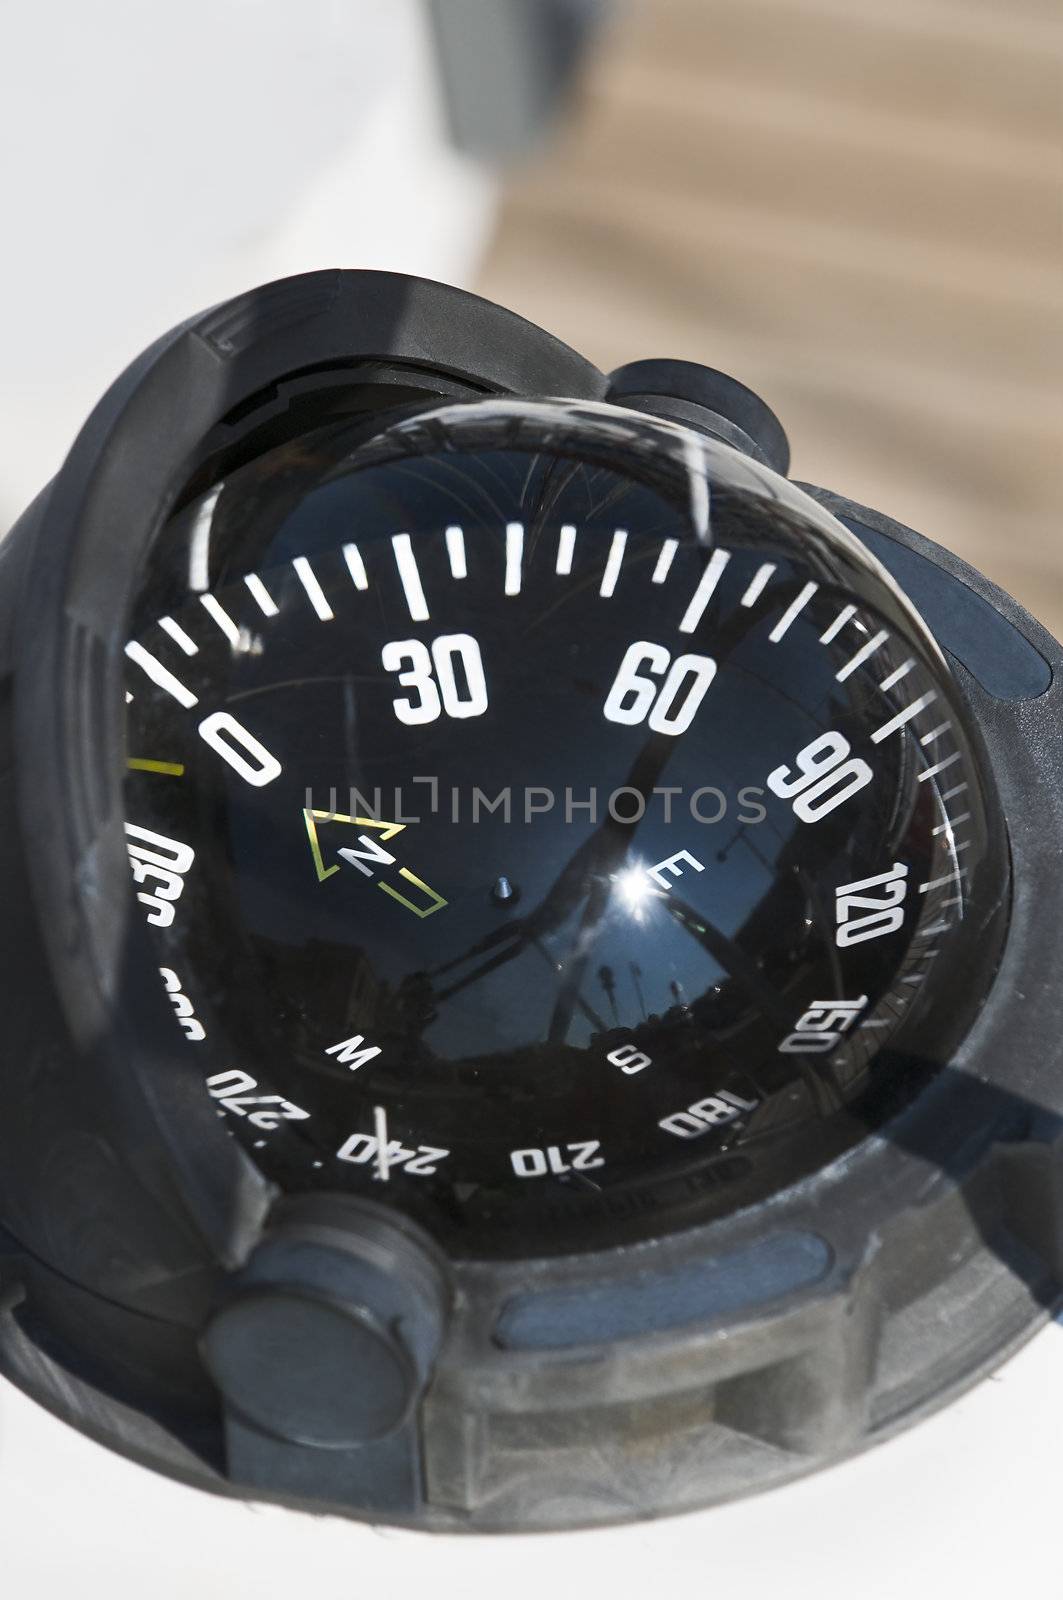 Close-up of a nautical compass